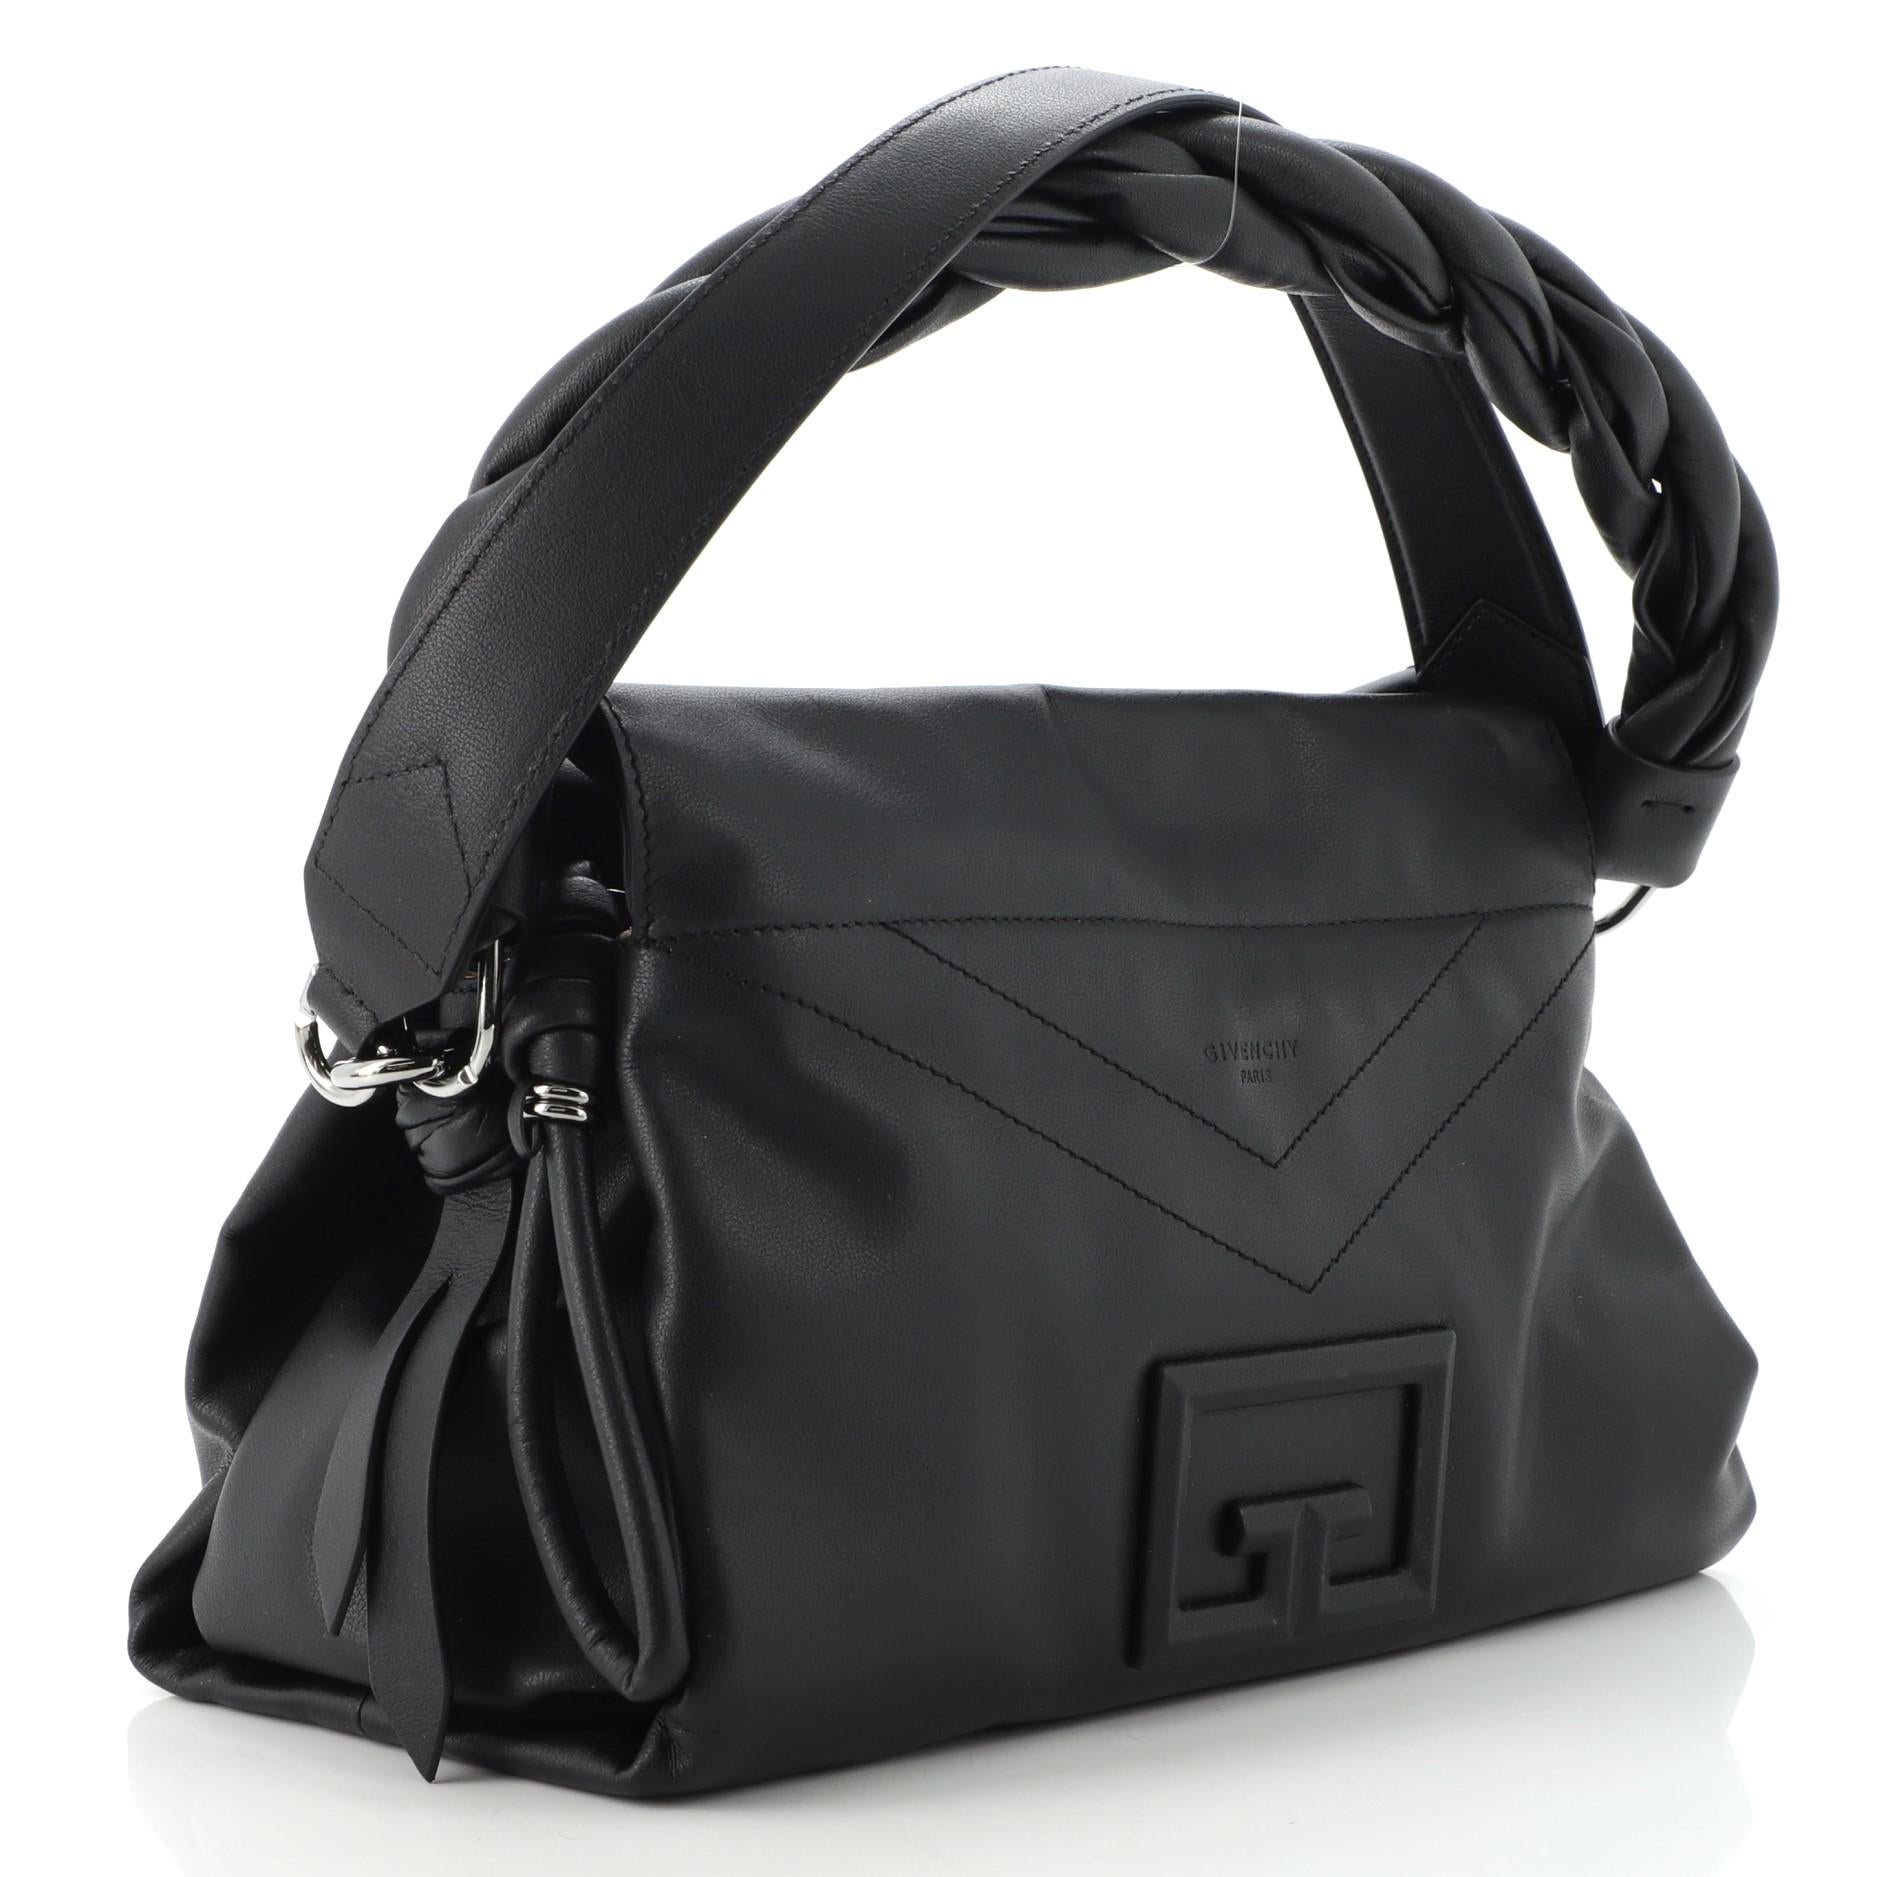 Black Givenchy ID93 Bag Leather Medium